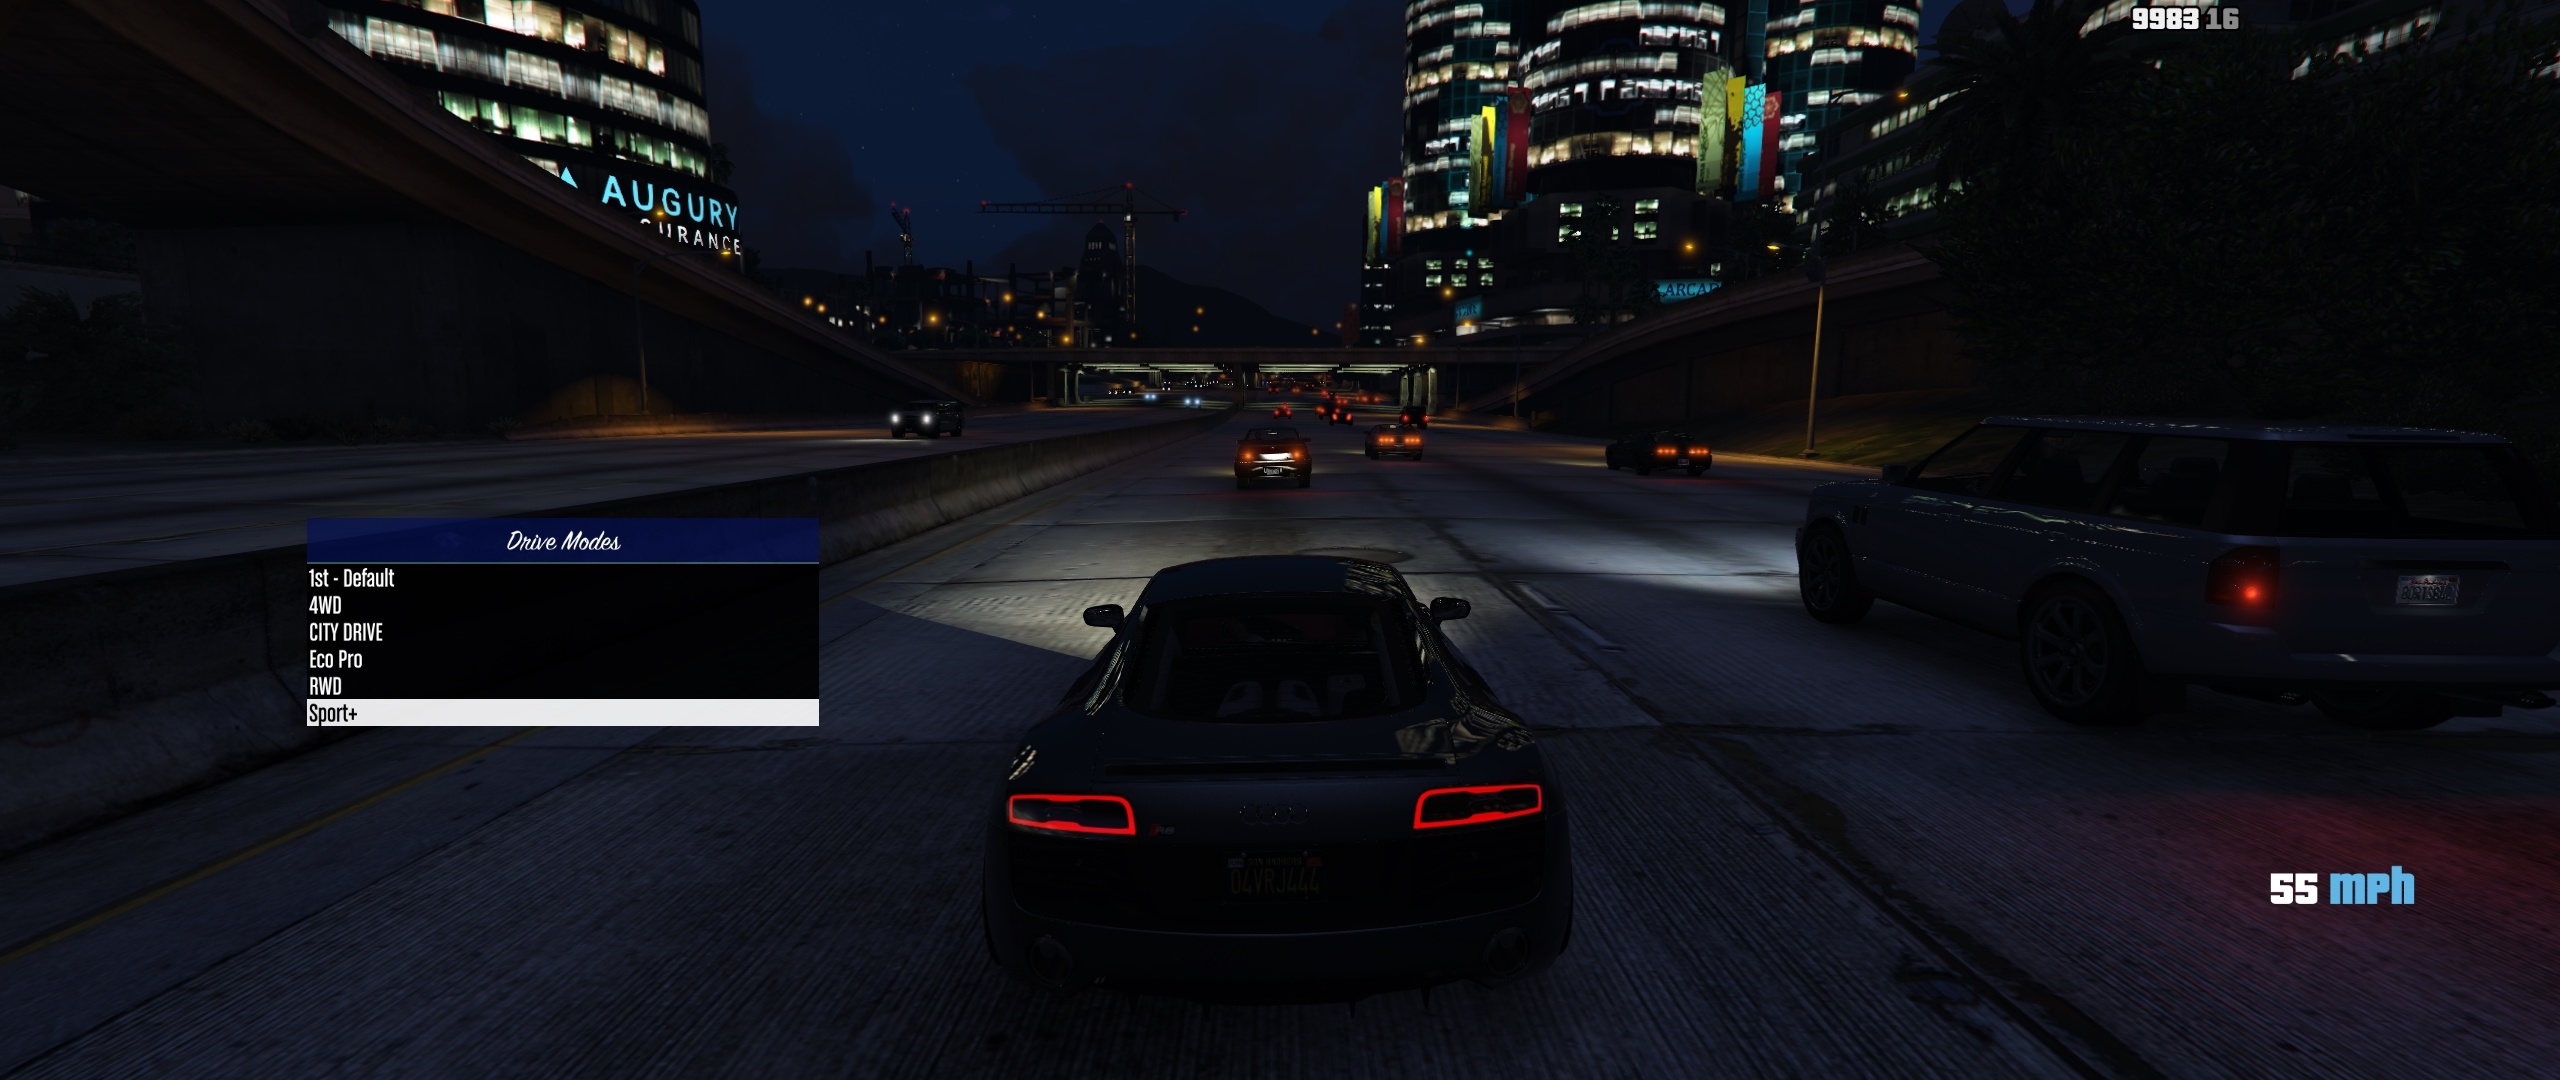 Drive mode cars modes. Handling GTA 5. Vehicle Drive Modes. V Drive. Default City.